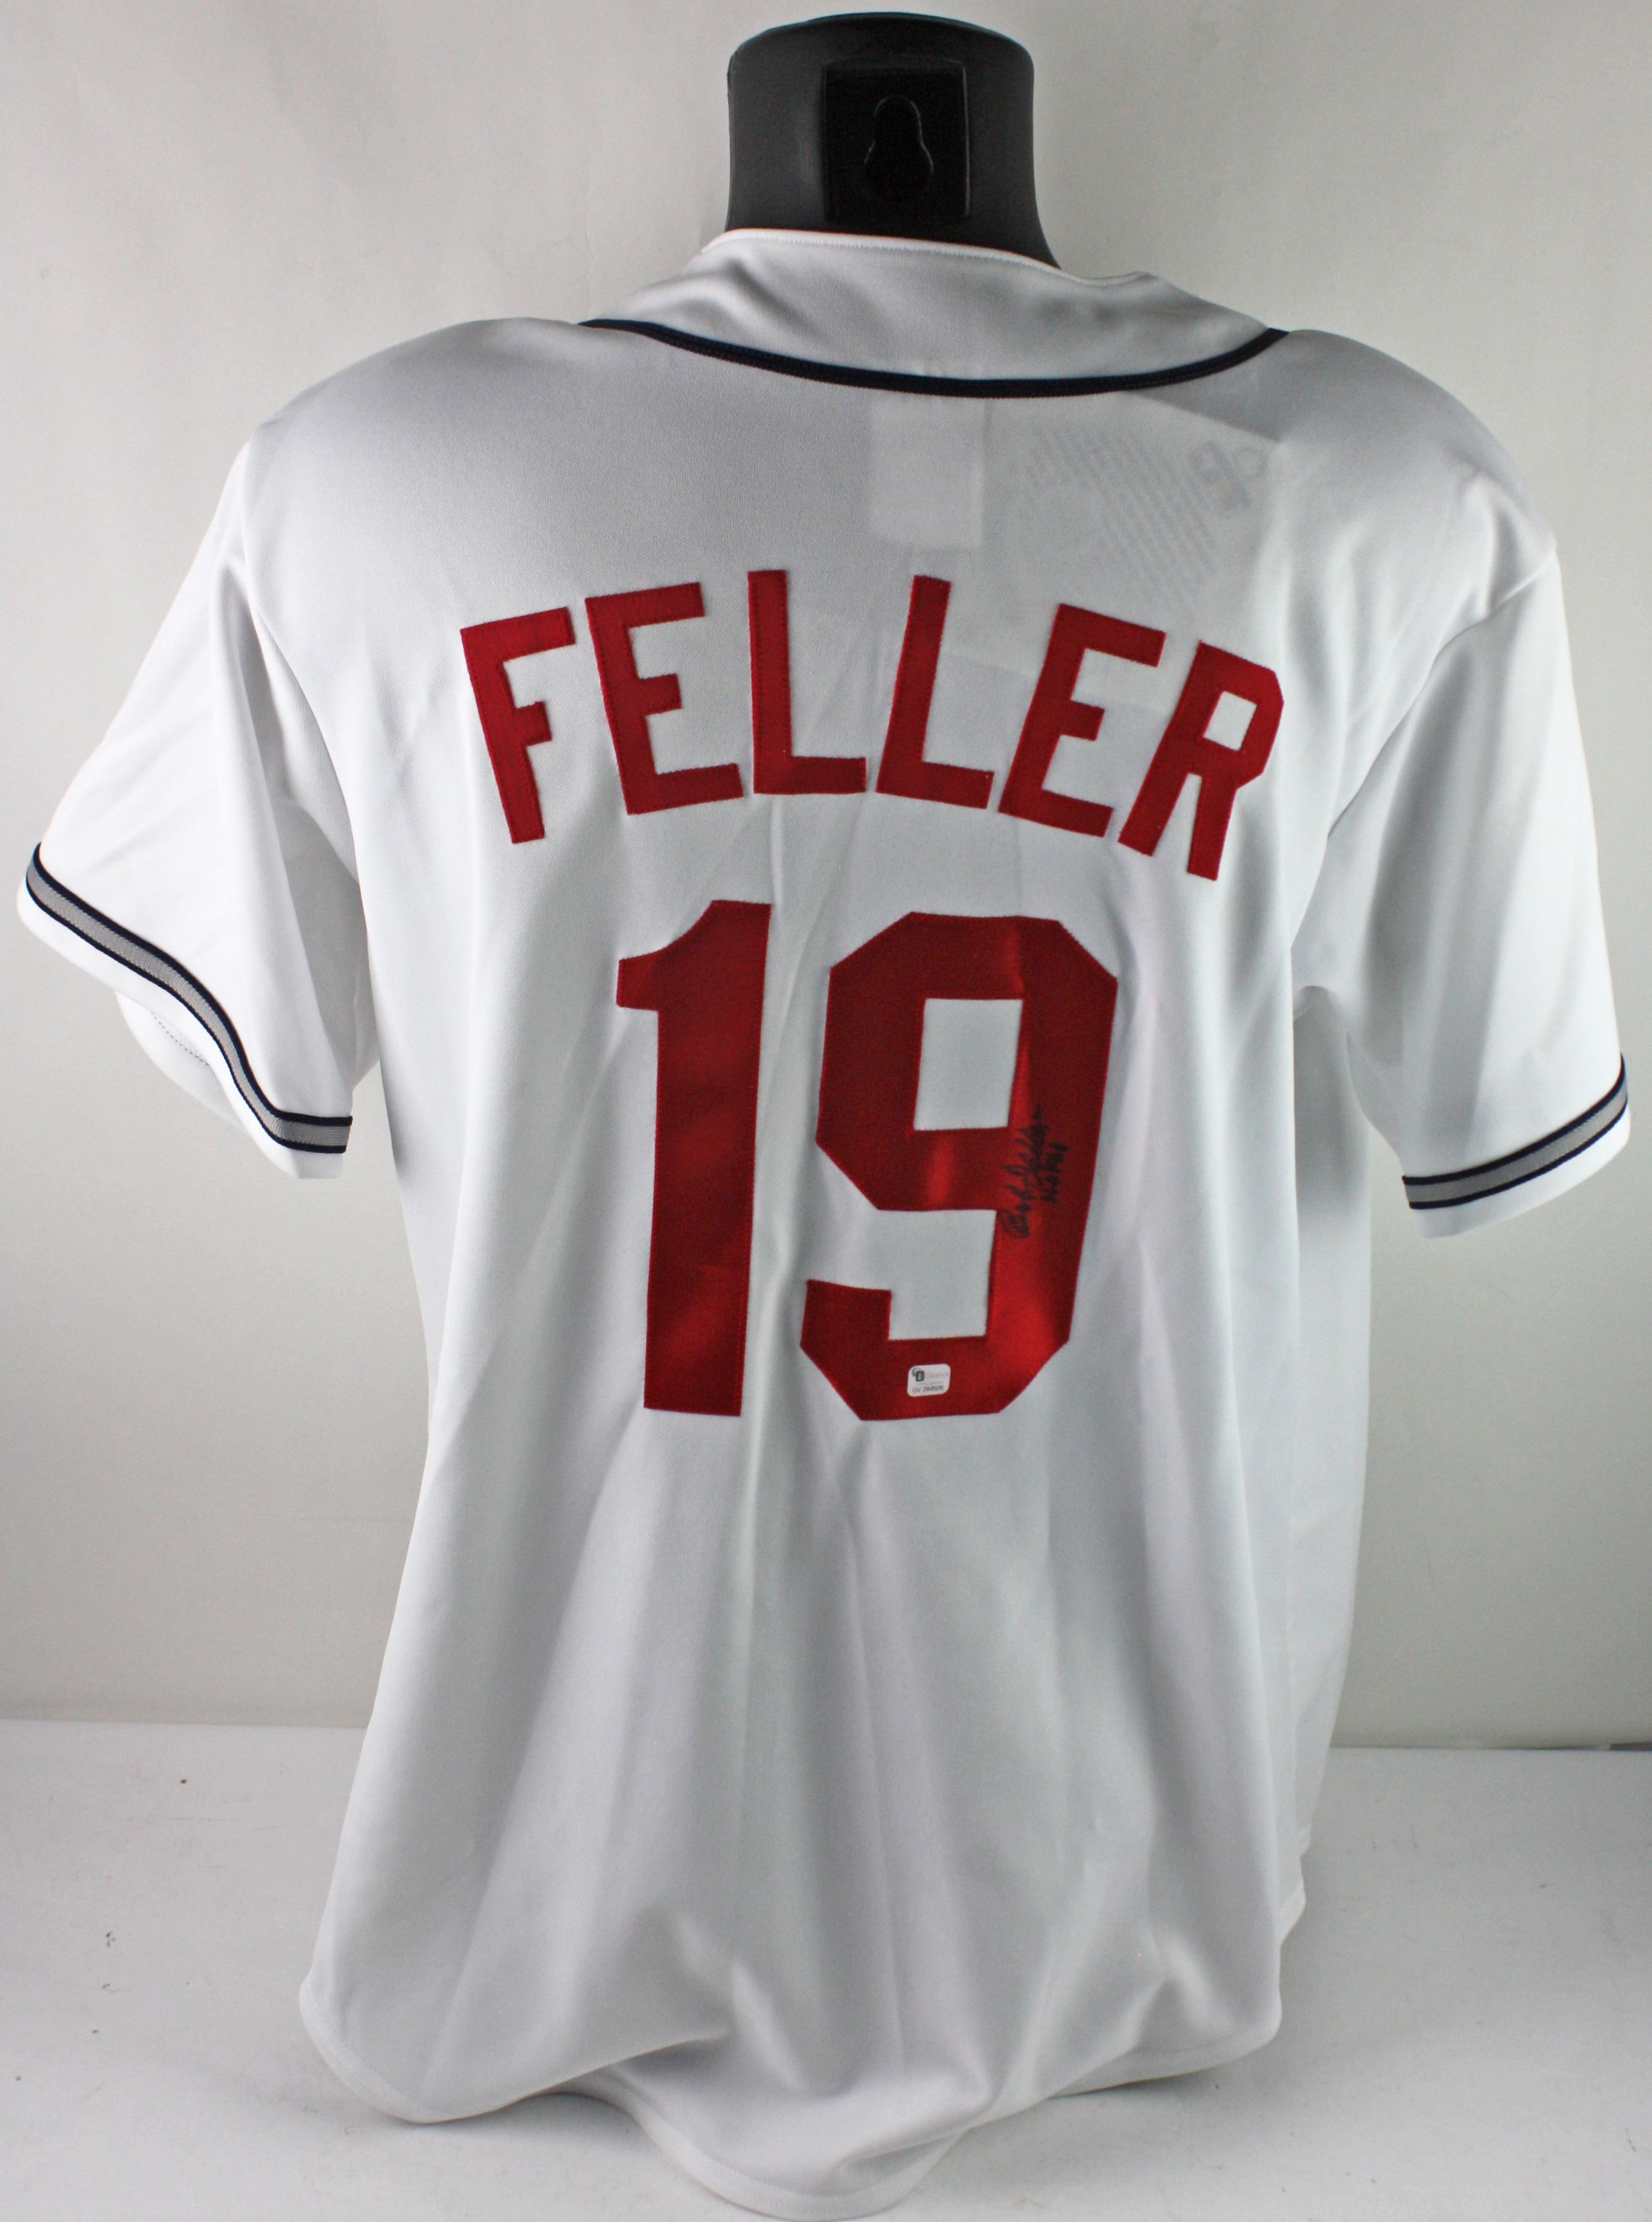 Sold at Auction: Bob Feller Signed Cleveland Indians Jersey, PSA